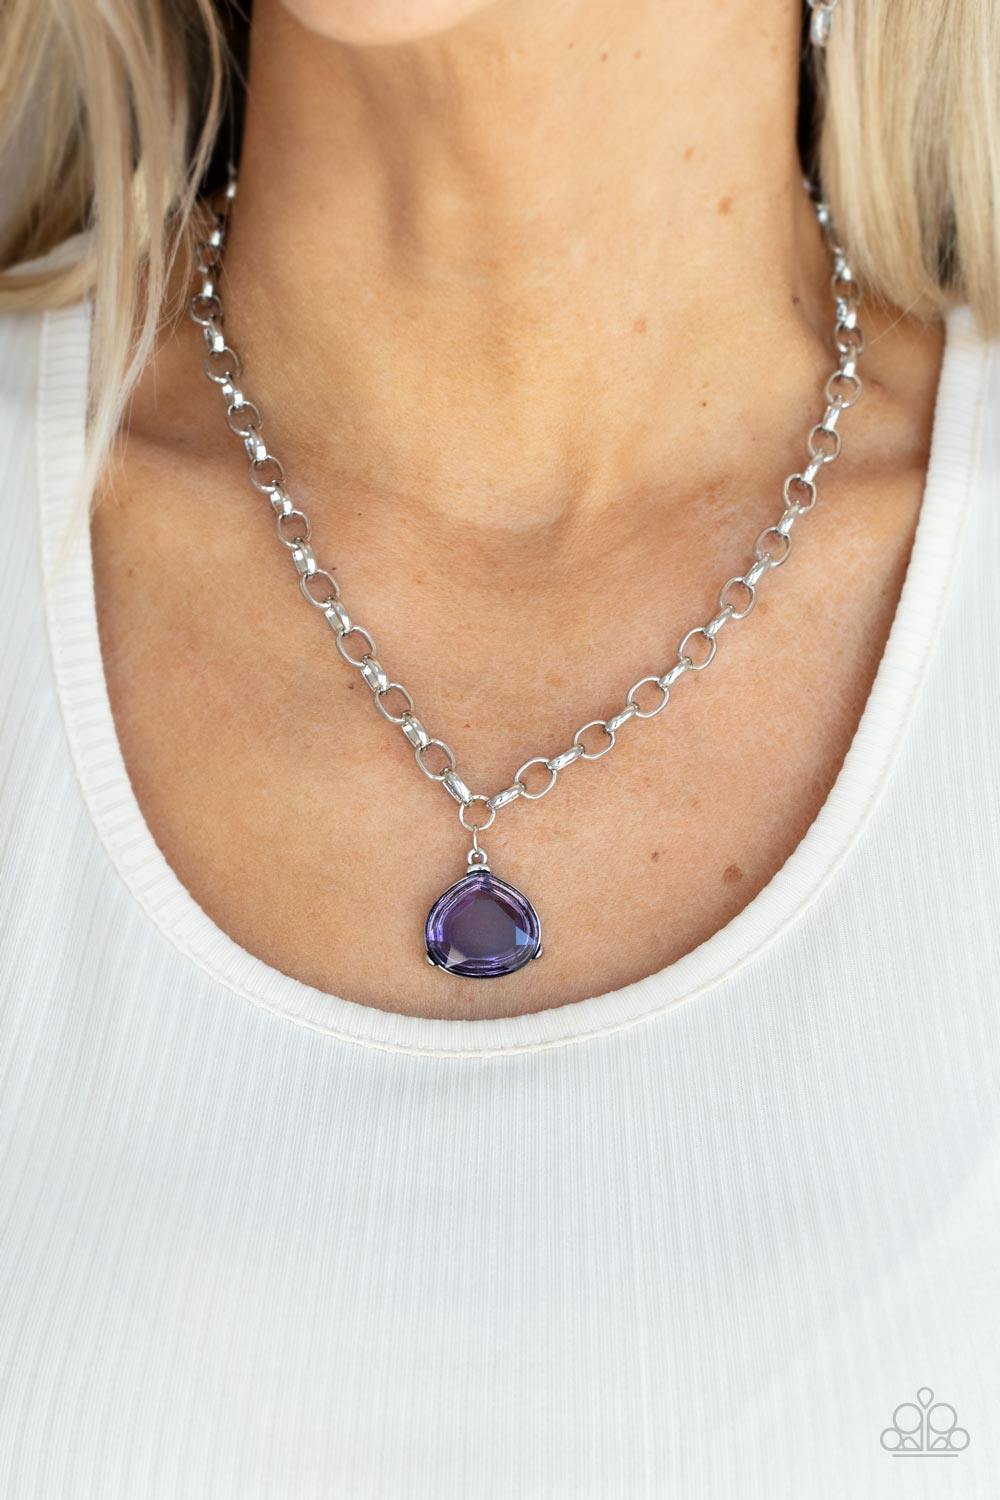 Gallery Gem Purple Rhinestone Necklace - Paparazzi Accessories- lightbox - CarasShop.com - $5 Jewelry by Cara Jewels